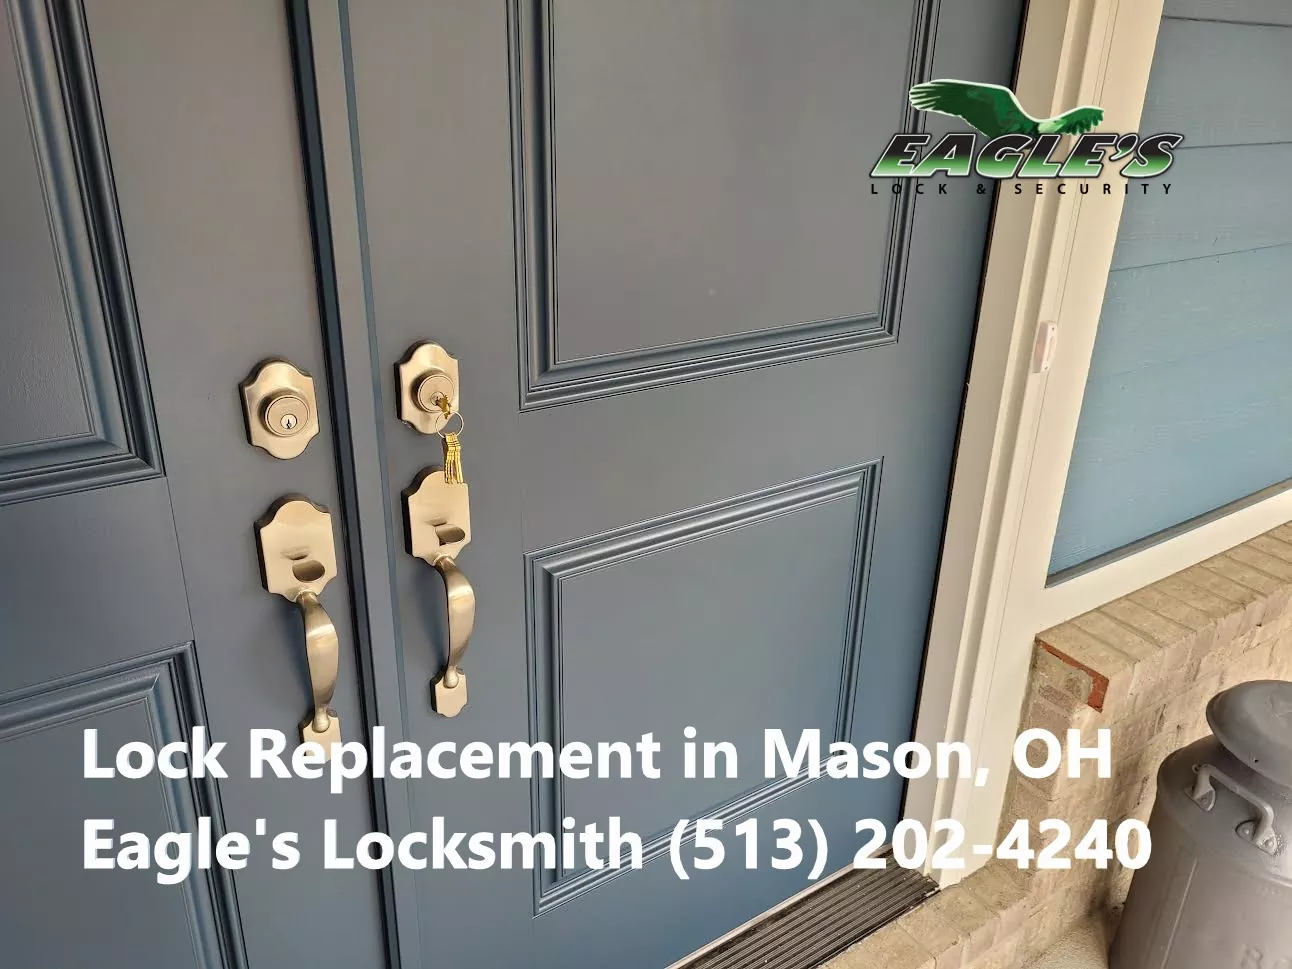 Lock Replacement in Mason, Ohio 45040